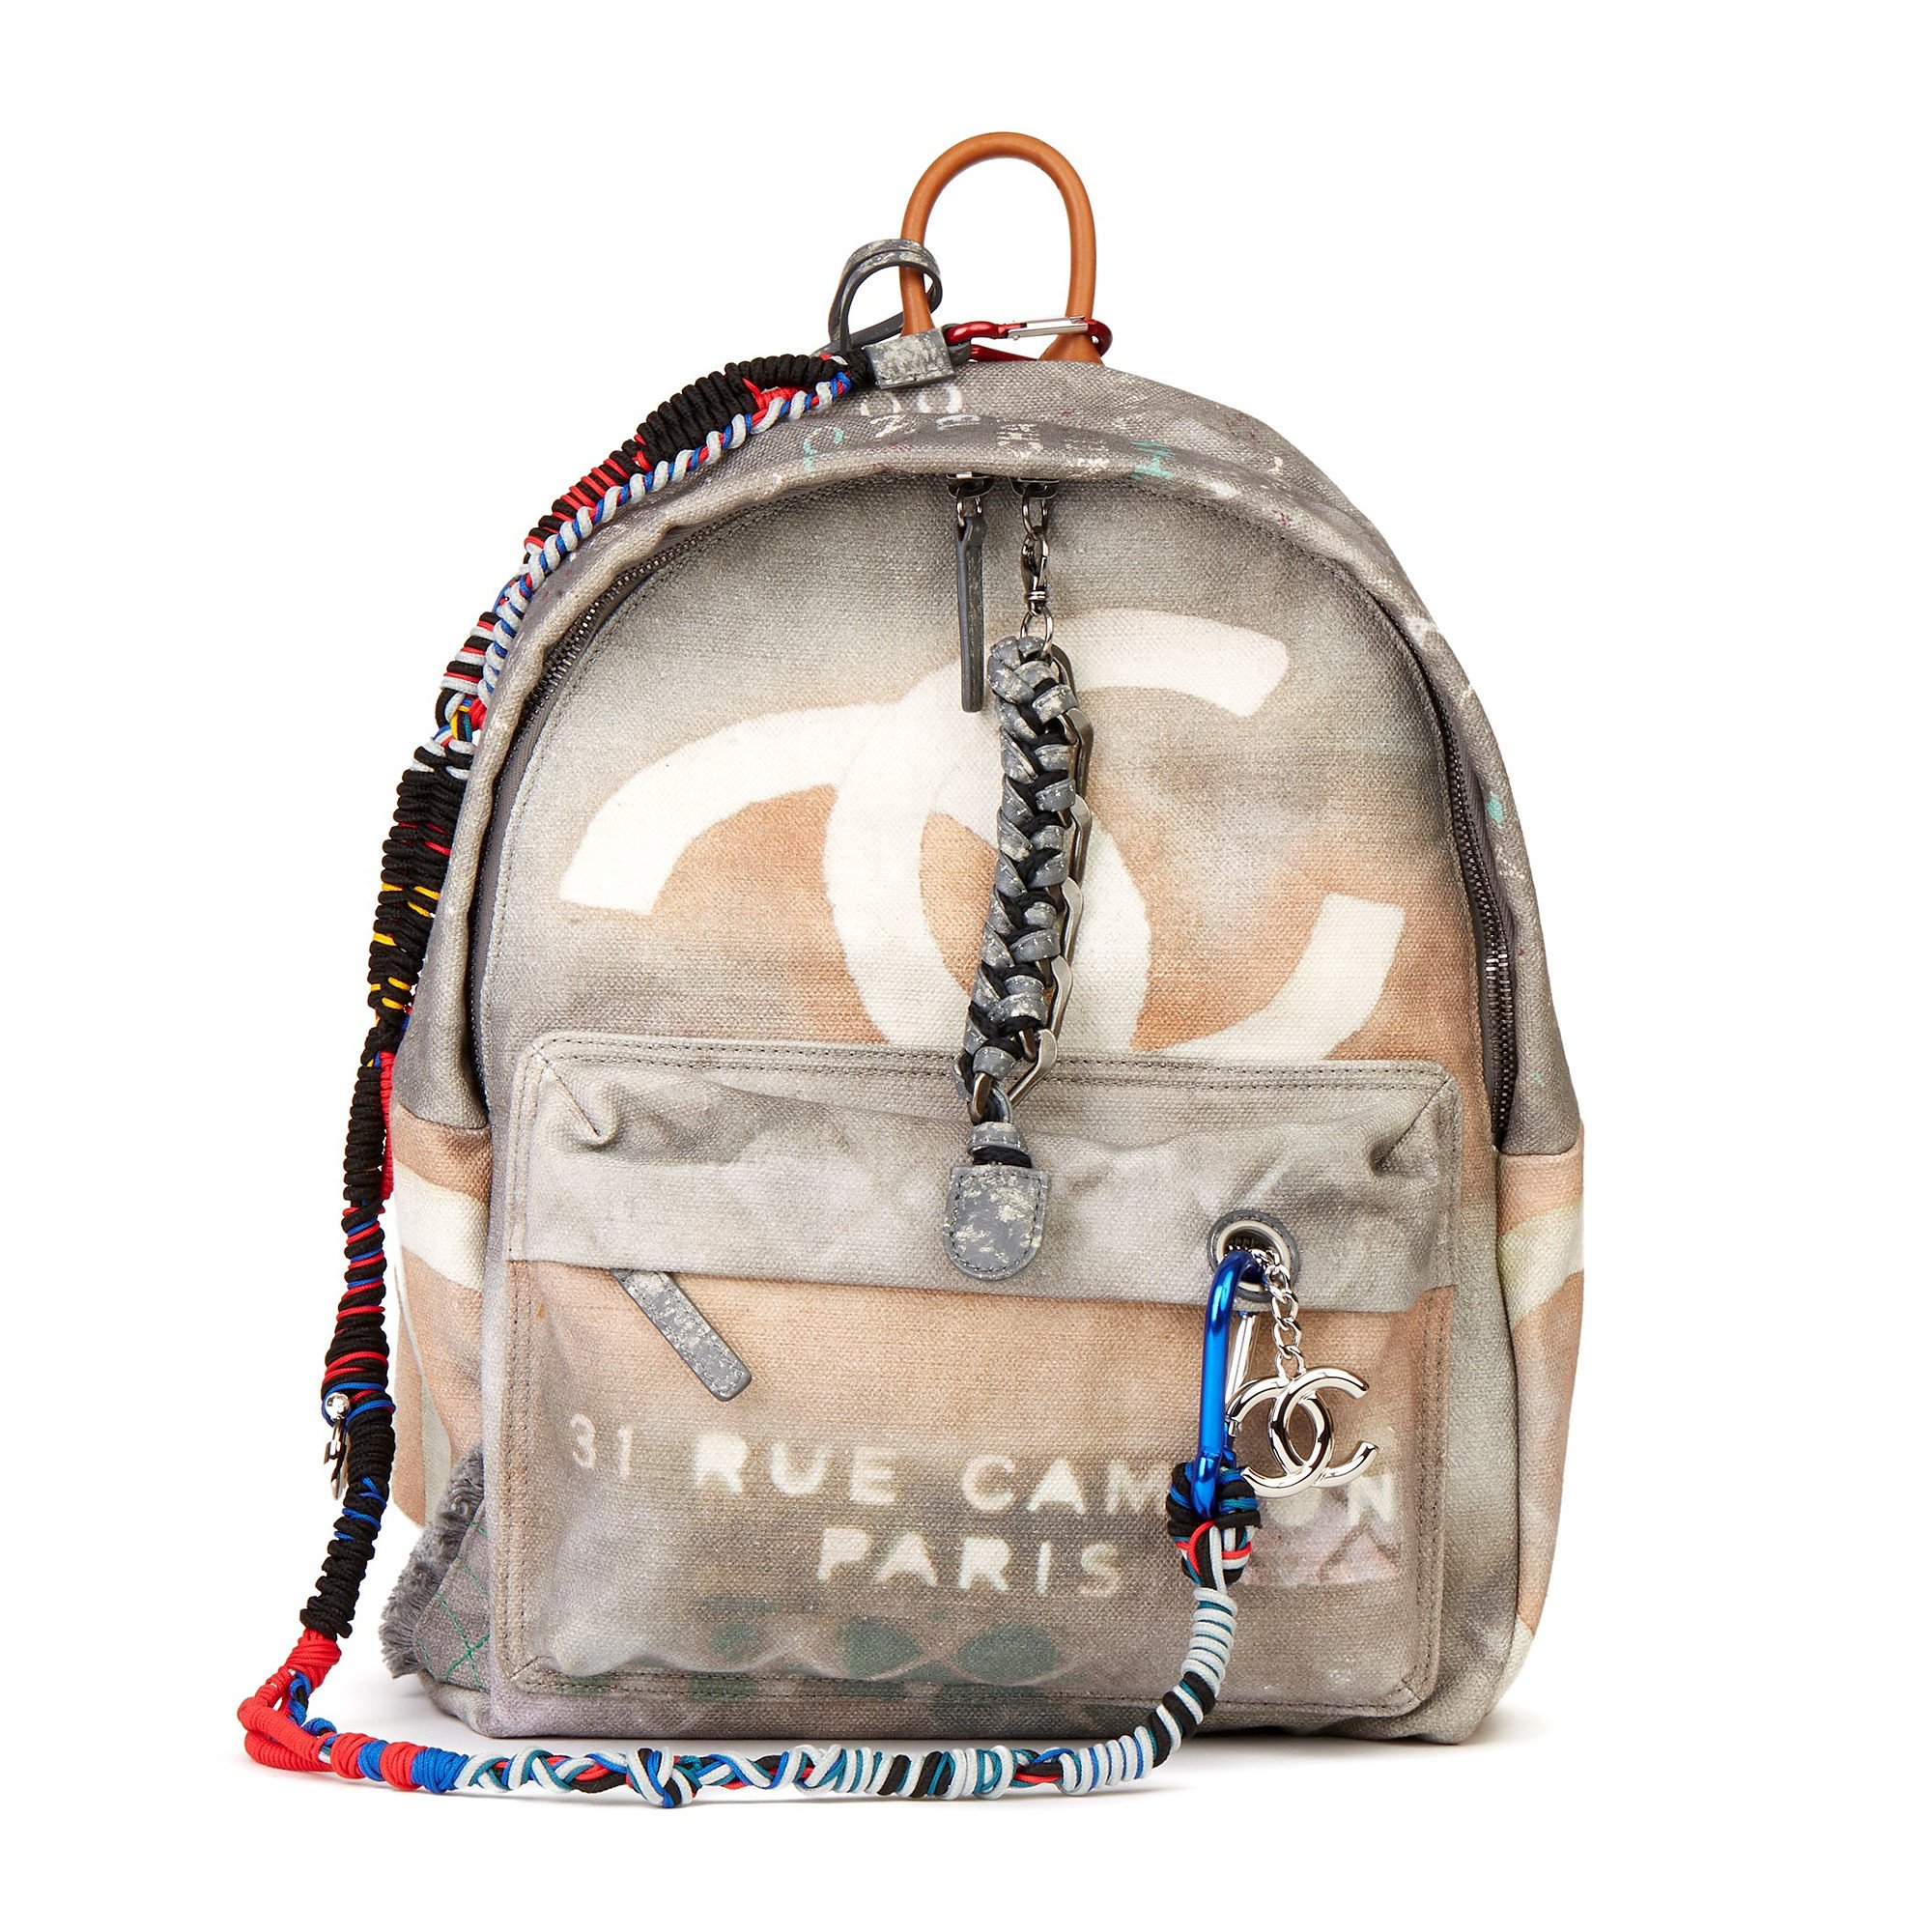 Chanel Backpacks in 2022